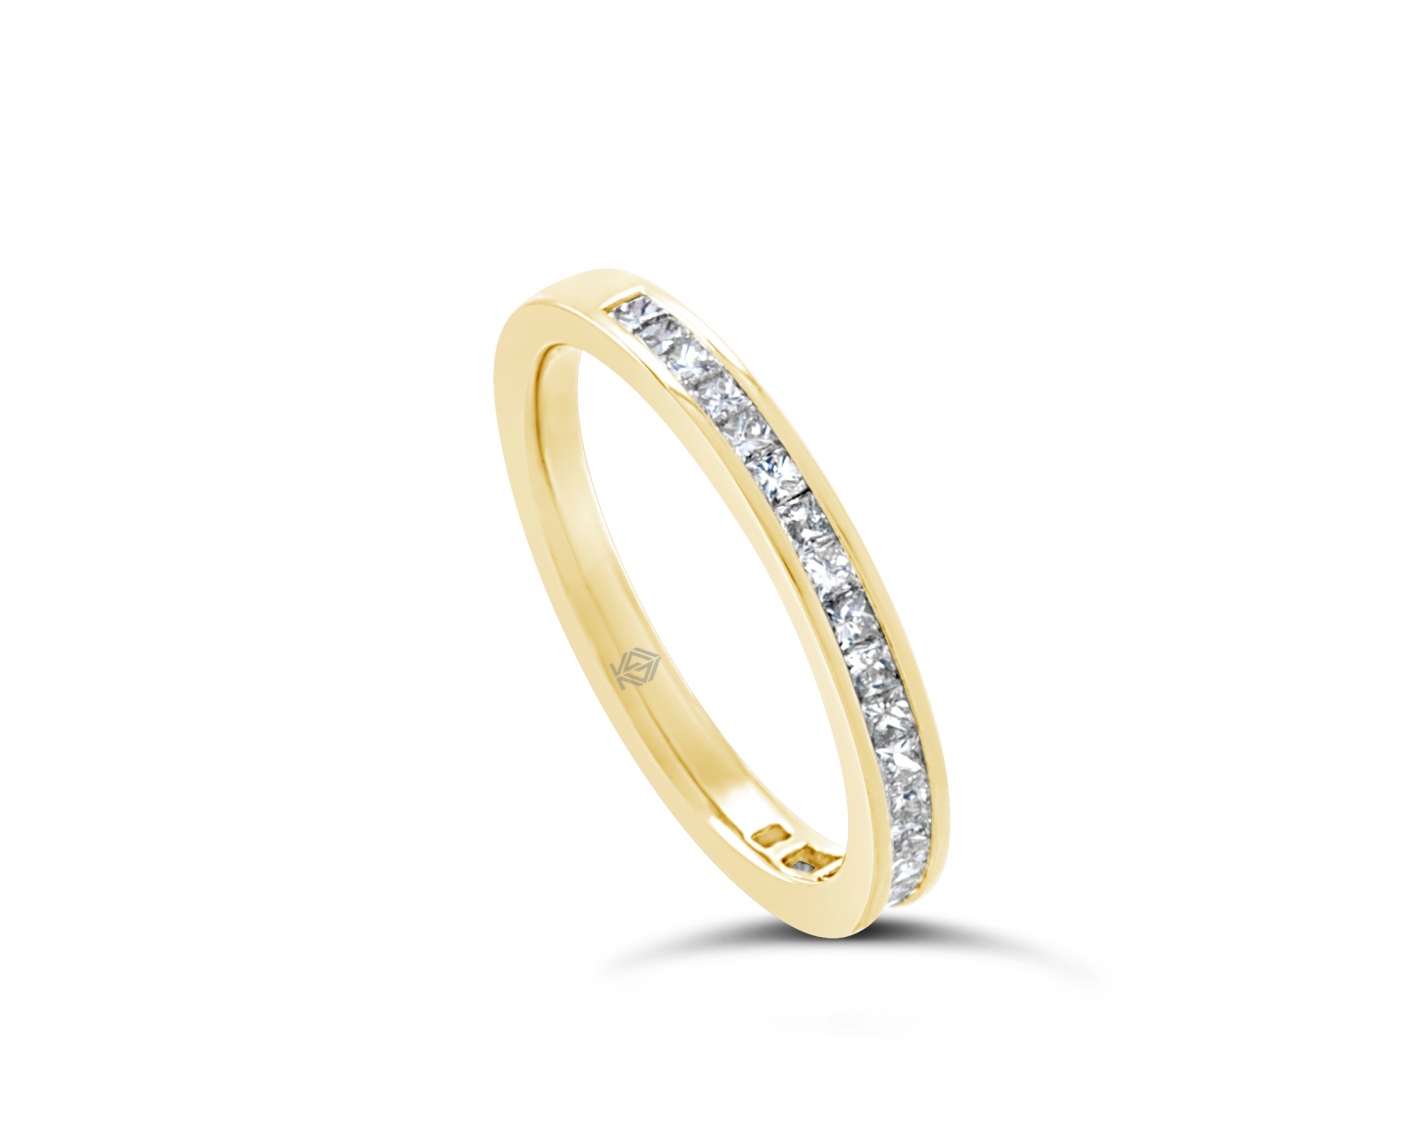 18k yellow gold half eternity channel set princess shaped diamond wedding ring Photos & images